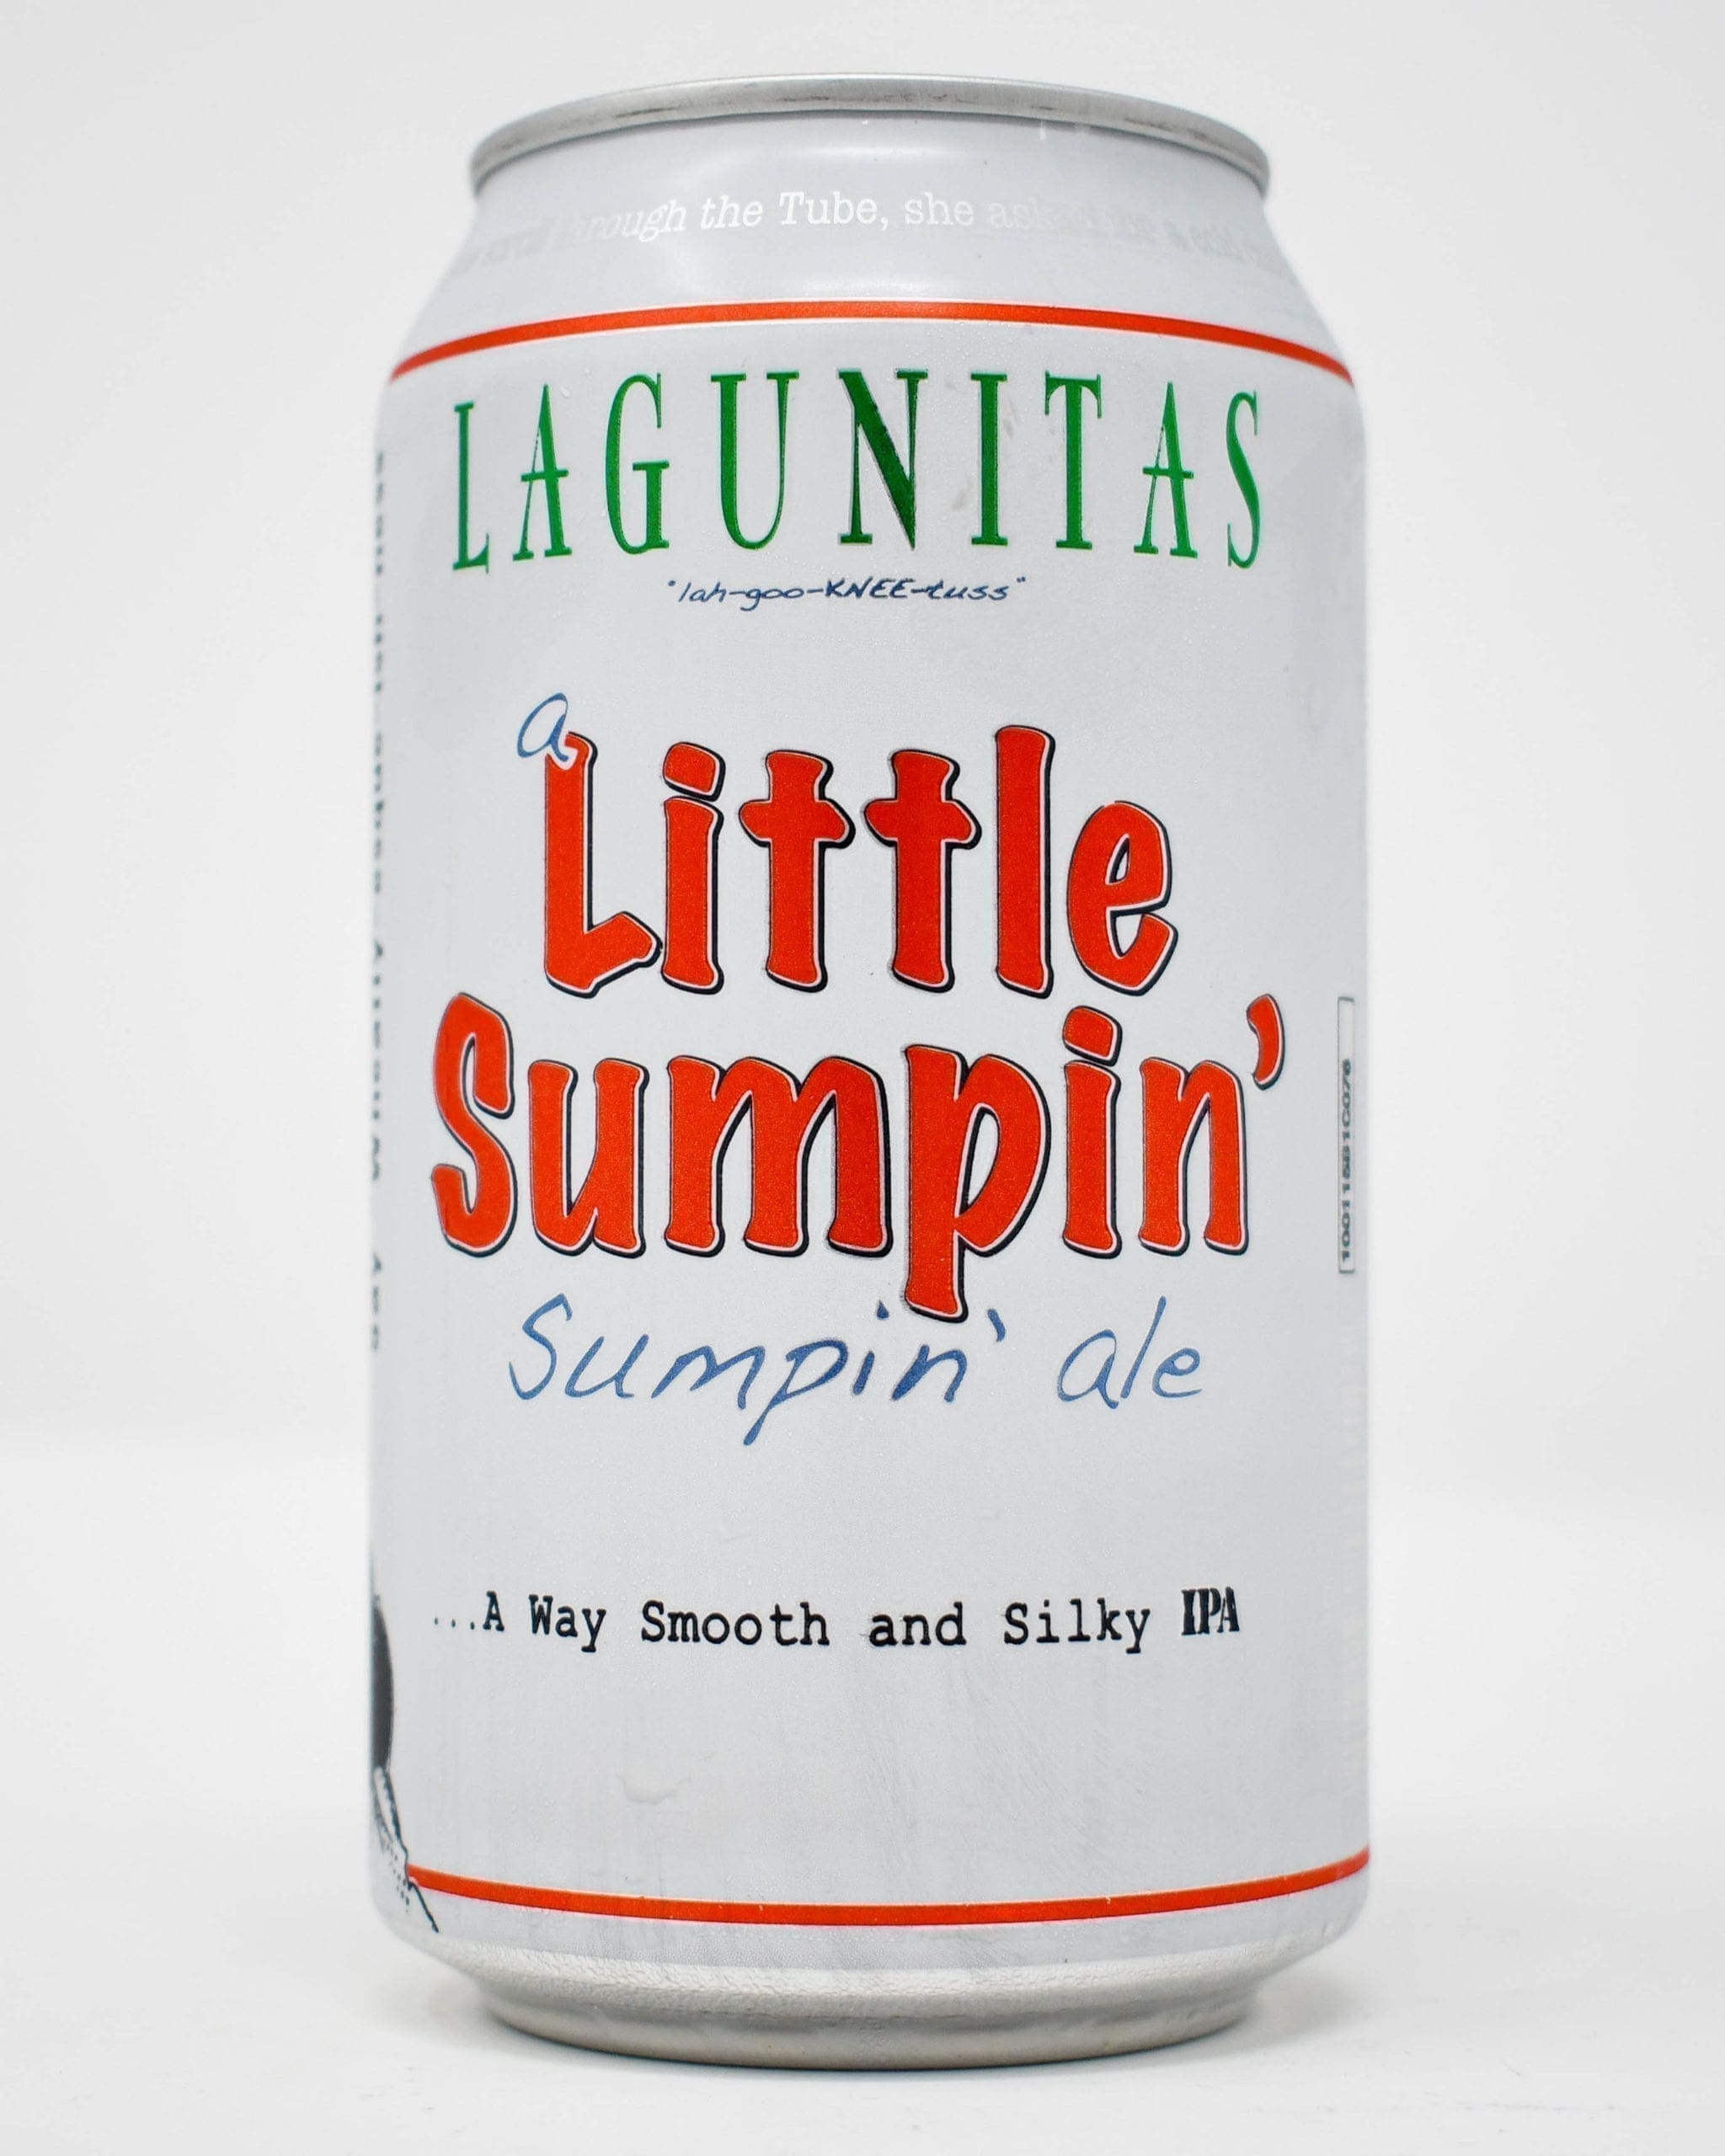 Lagunitas Sumin Sumpin enigszins 19.2 oz kan worden gedaan.